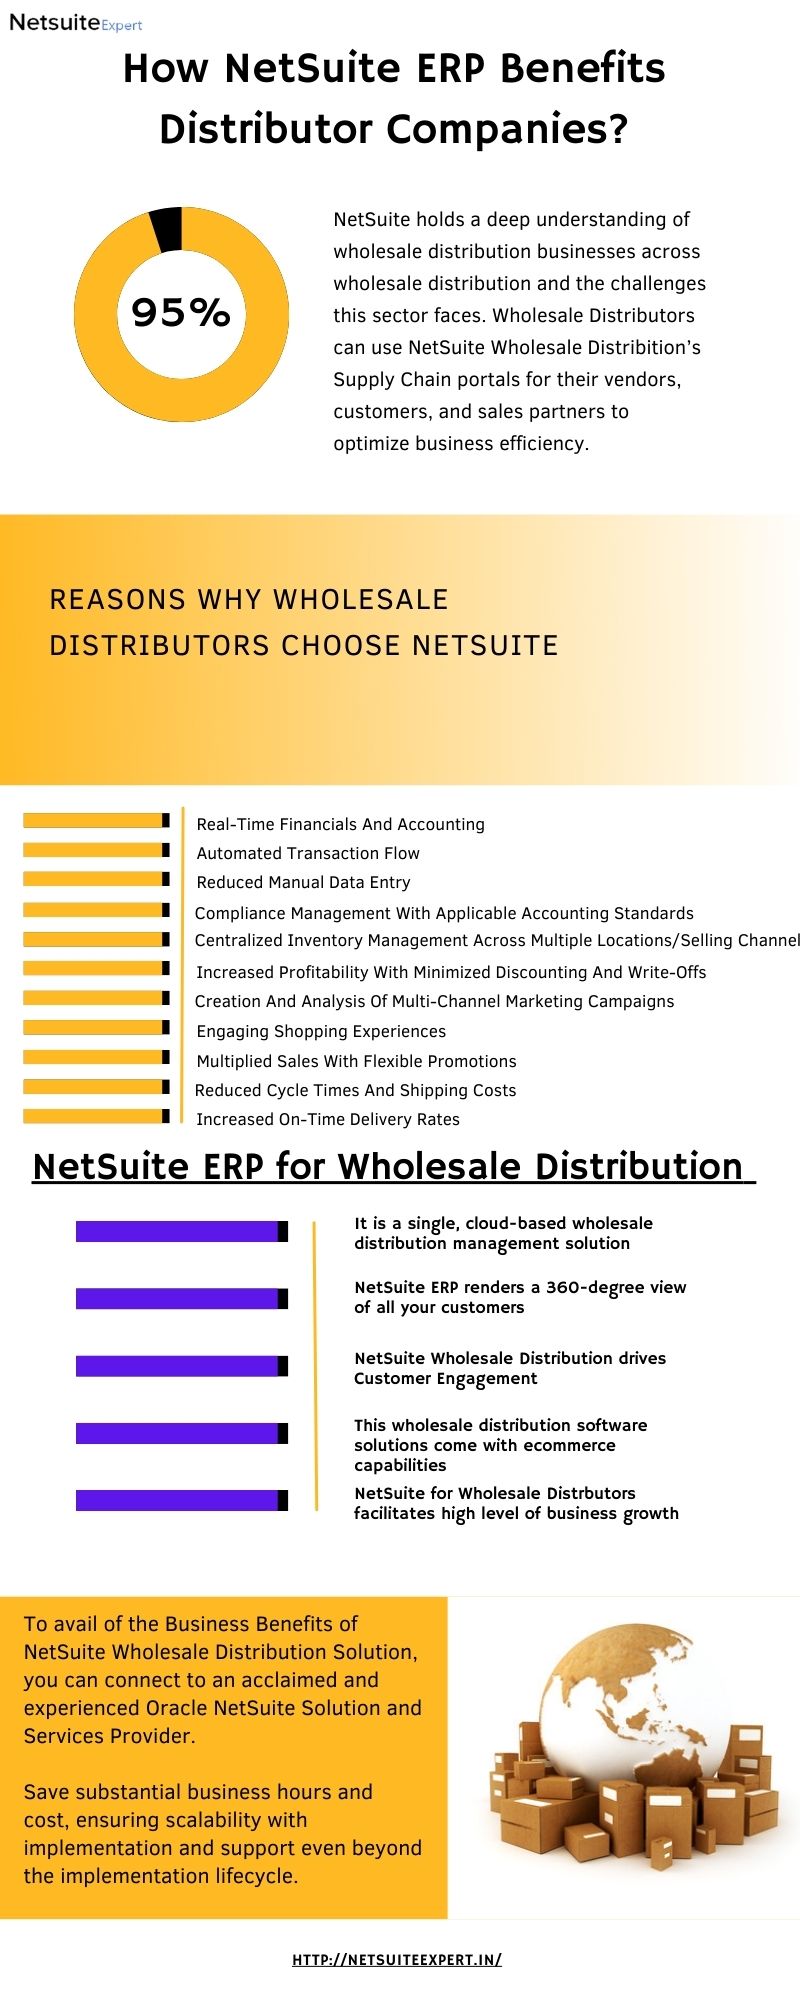 How NetSuite ERP Benefits Distributor Companies?